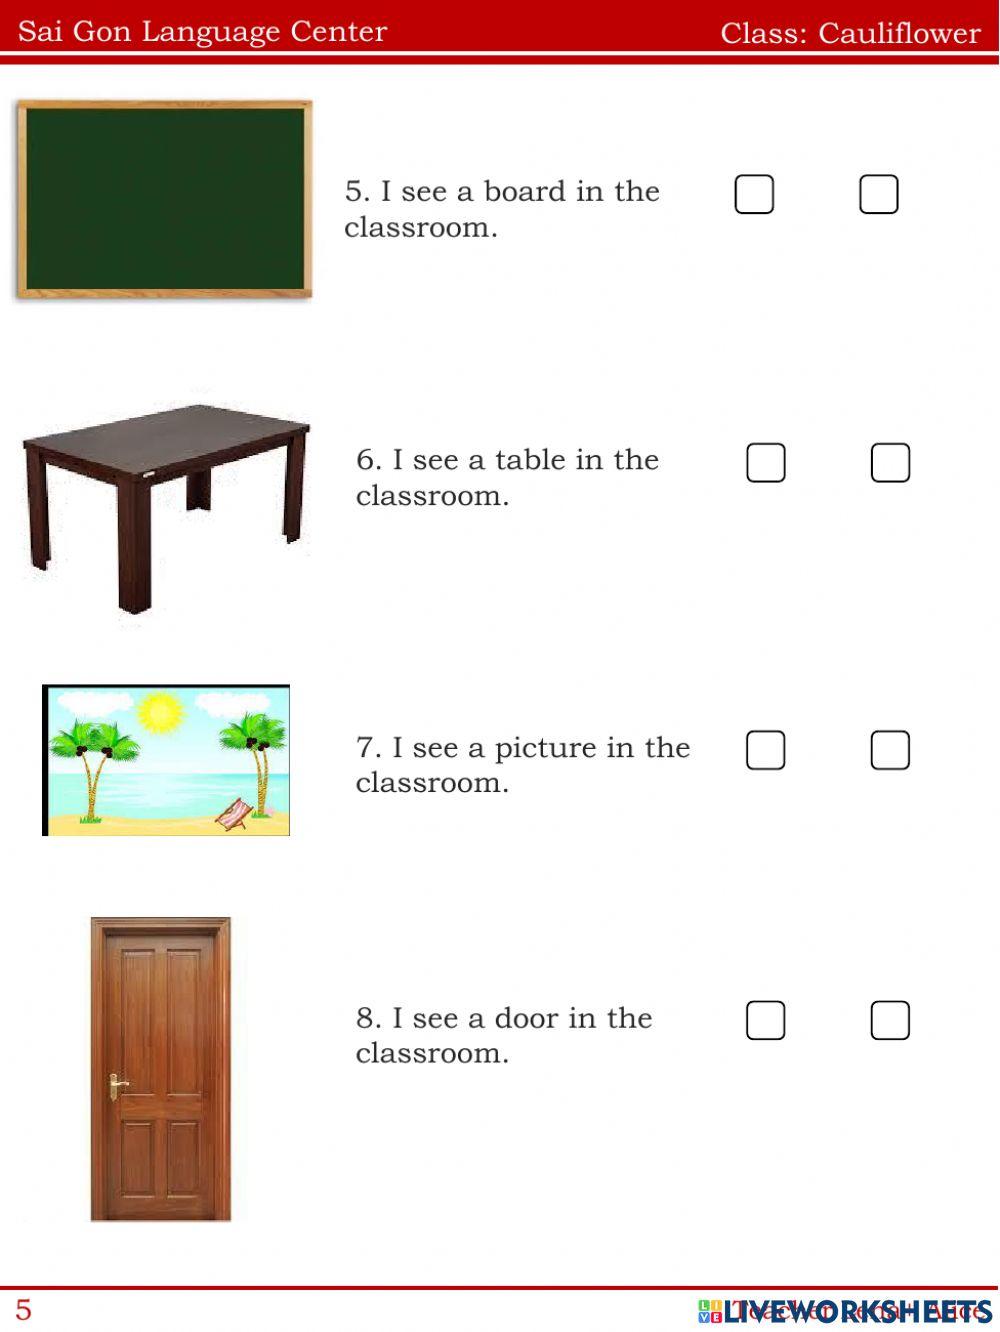 Classroom things